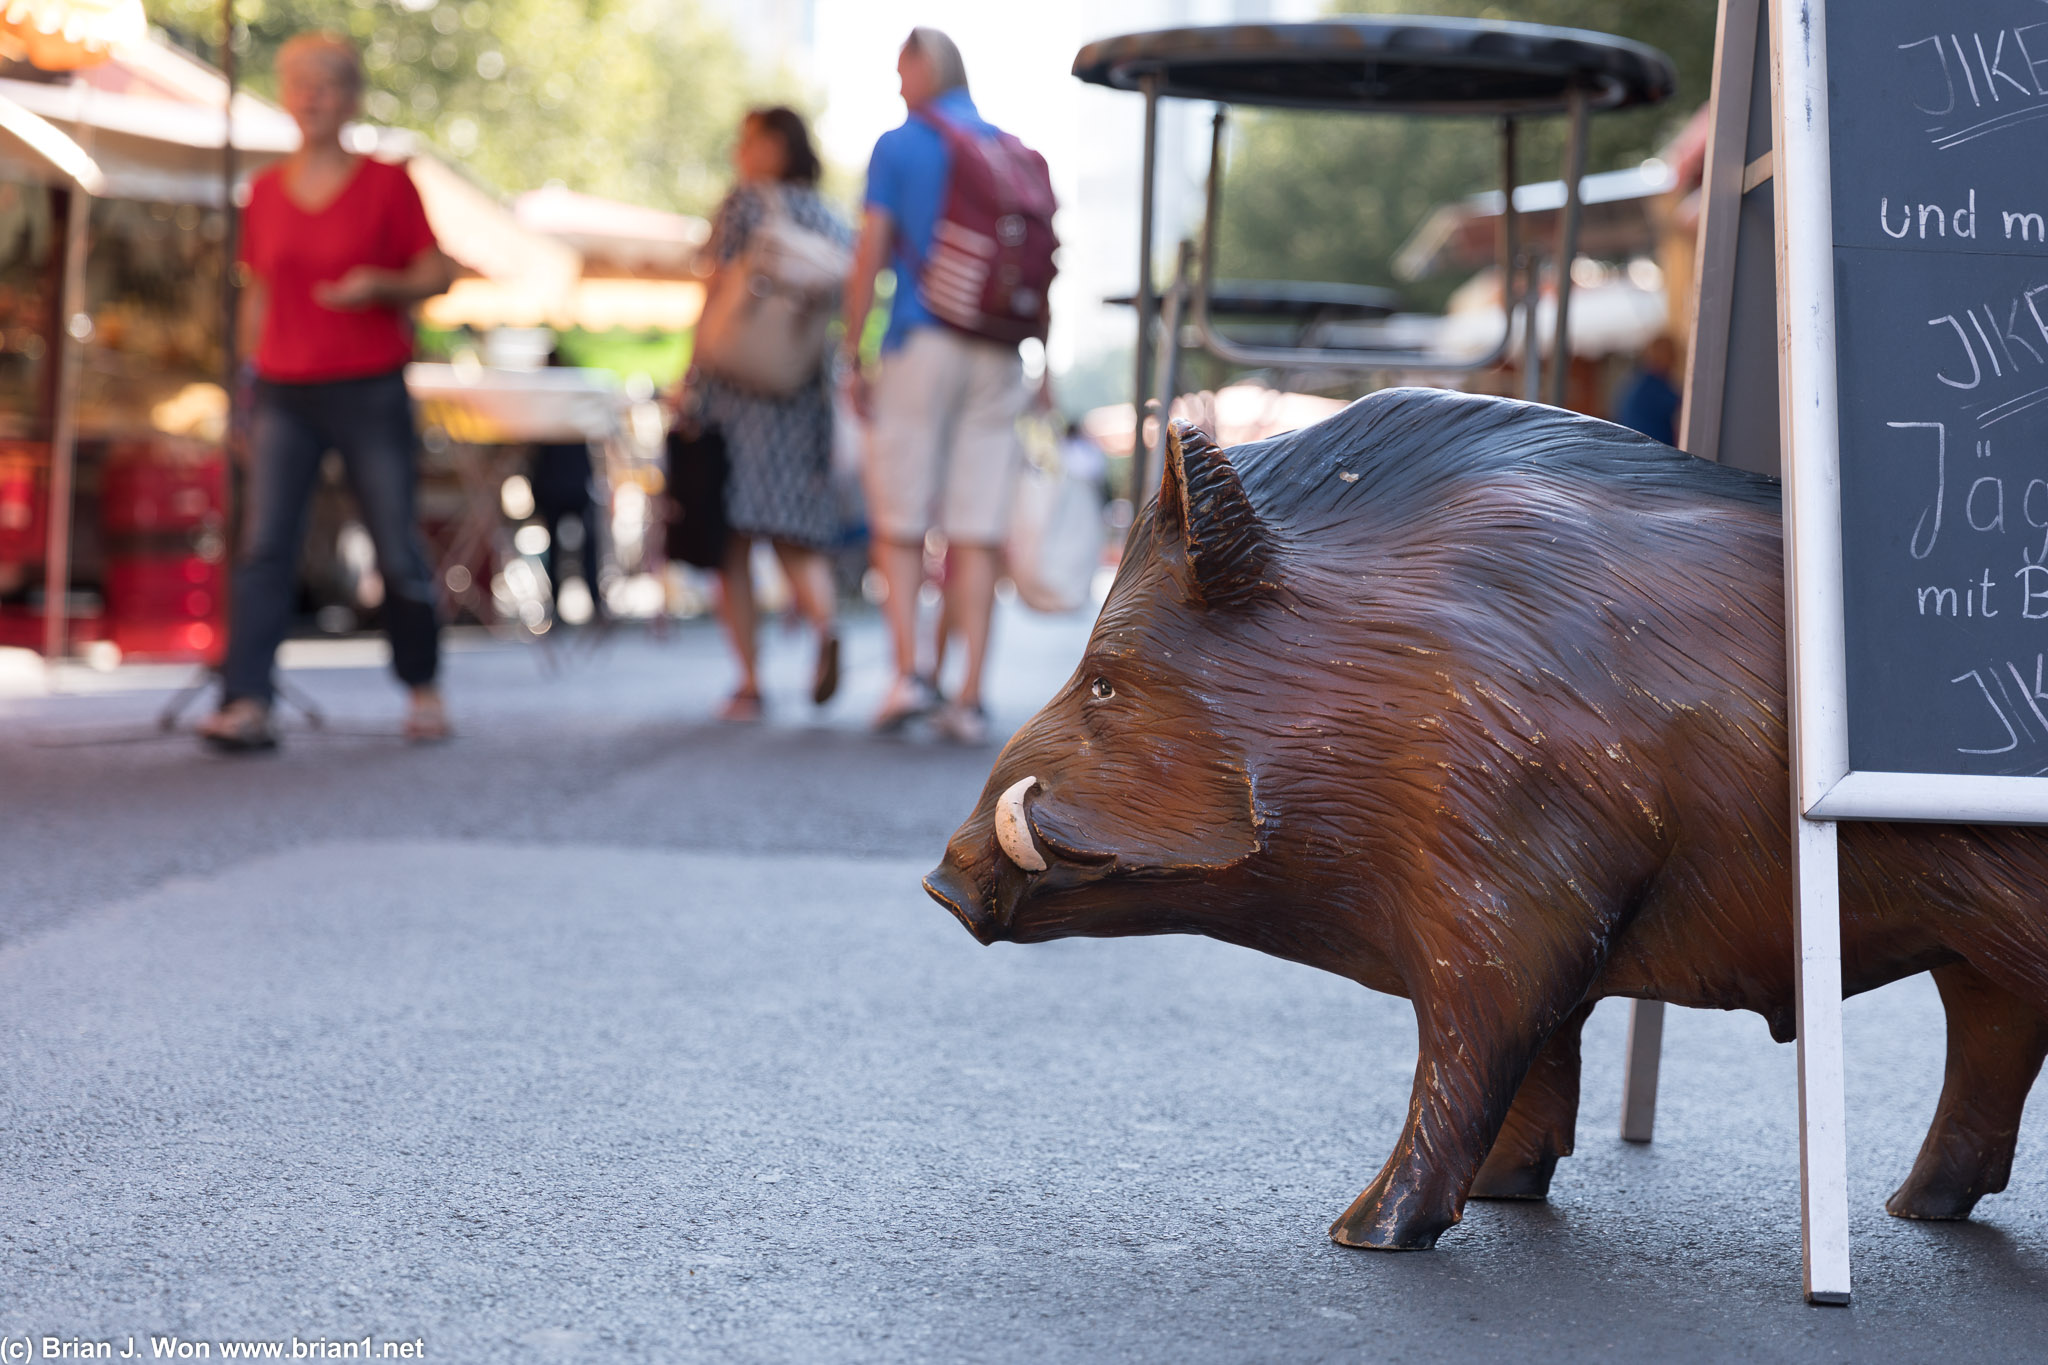 Wild boar at this food cart!